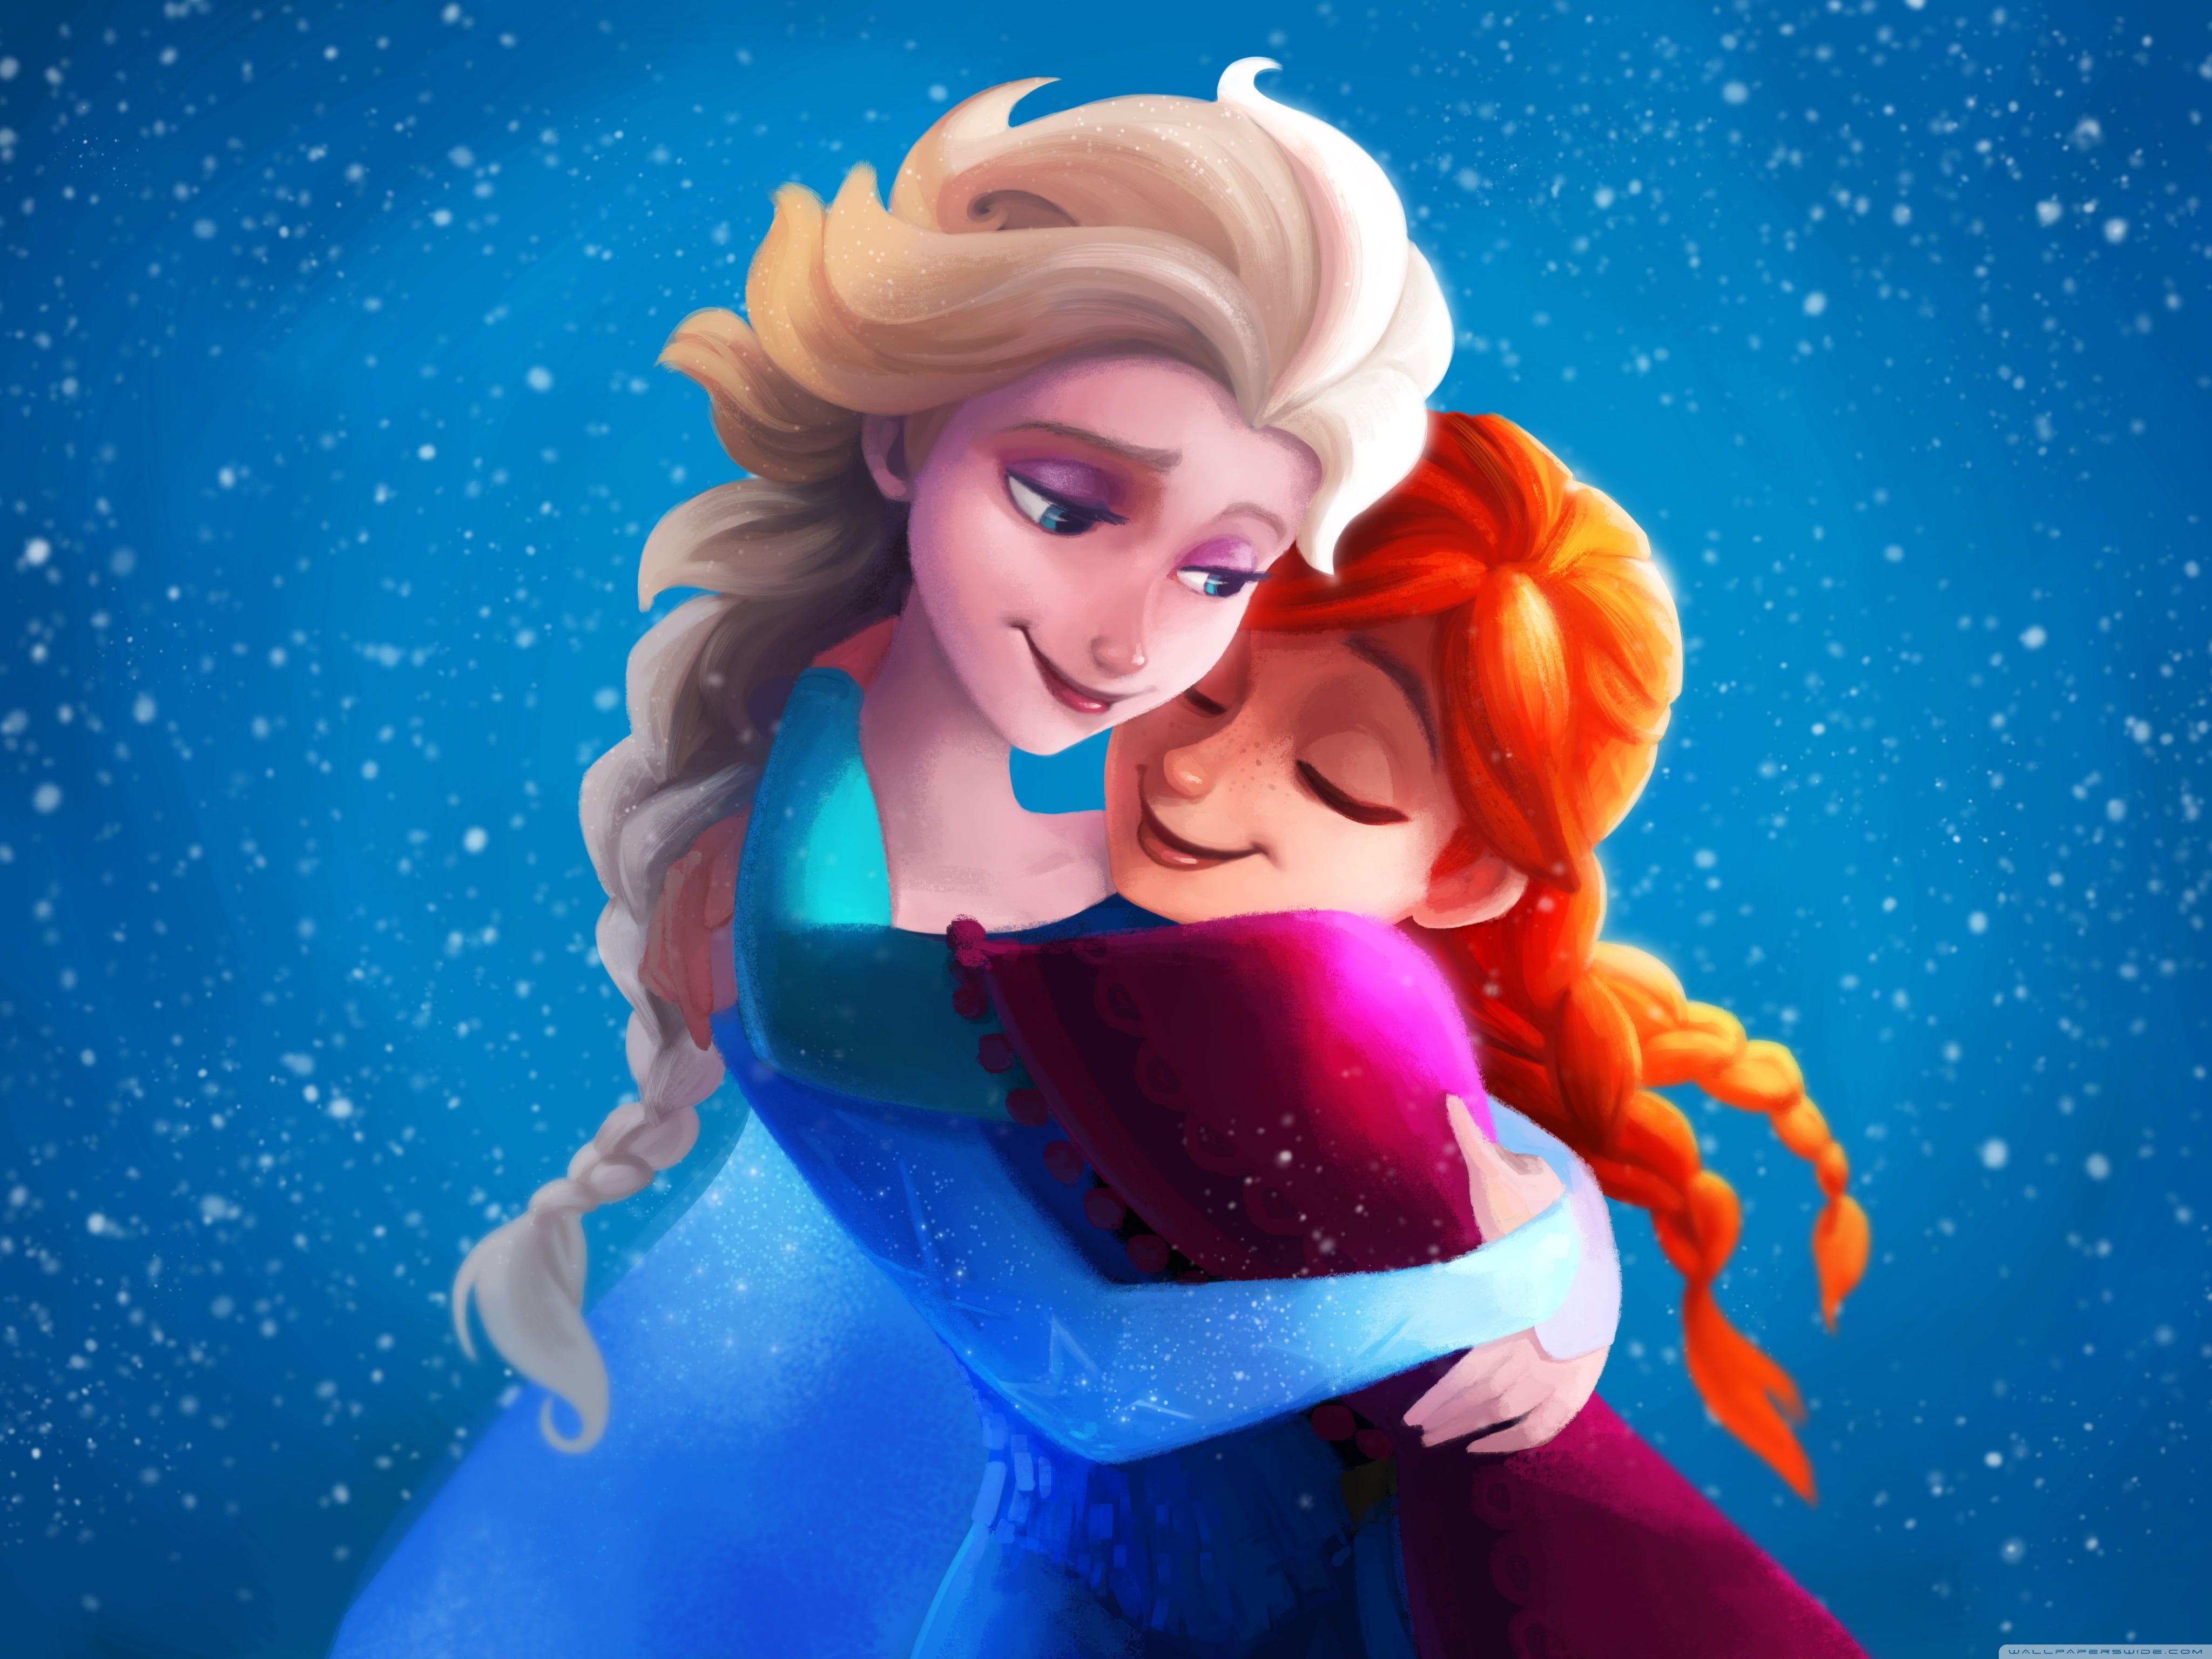 Disney Frozen Anna and Elsa illustration HD wallpaper. Wallpaper